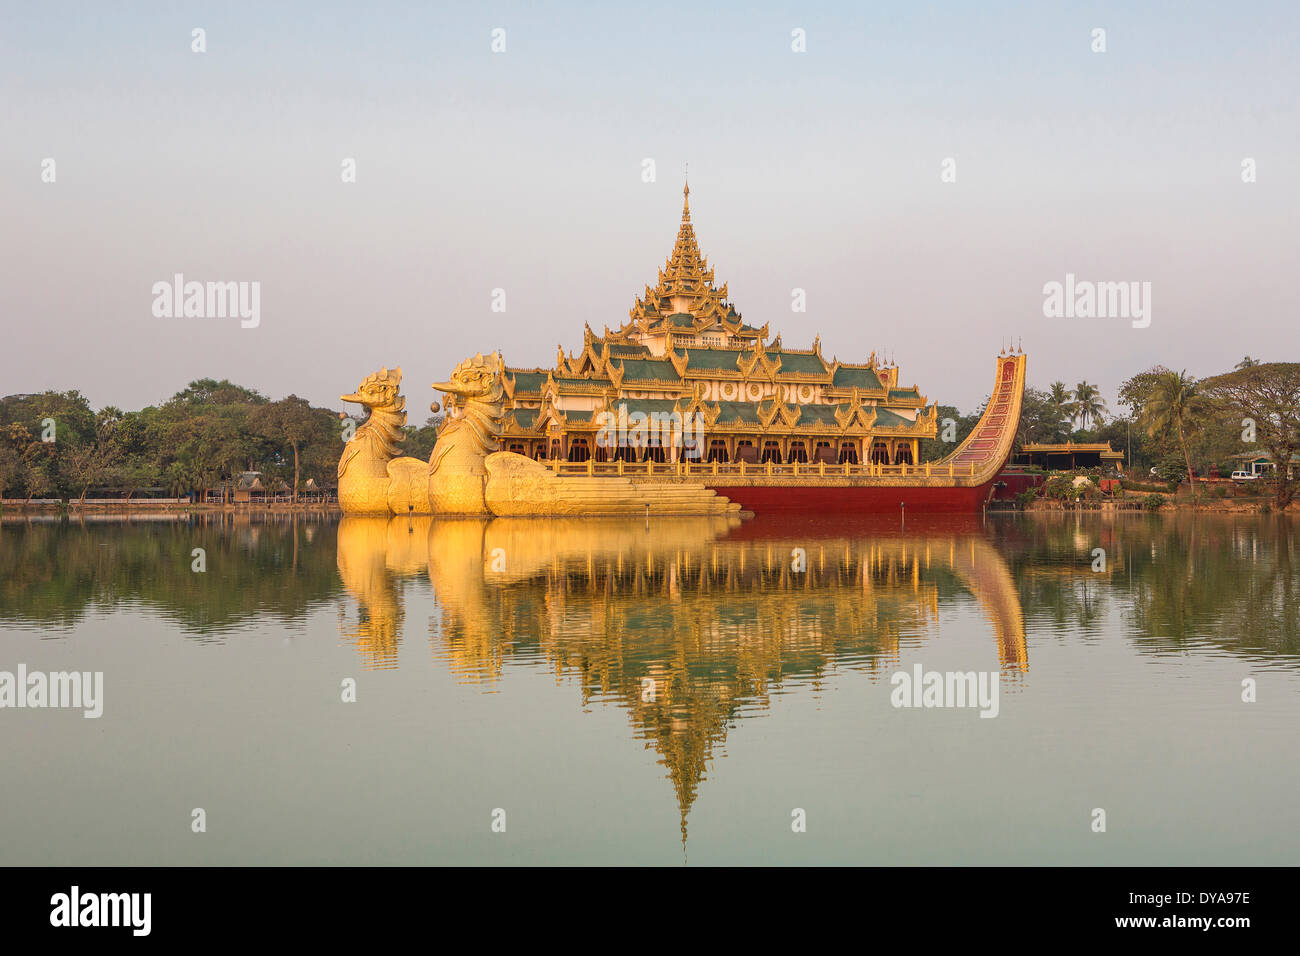 Myanmar Burma Asien Paya Yangon Rangun Kandawgyi schwimmende Architektur berühmten Blumen Bild See Reflexion resta Stockfoto